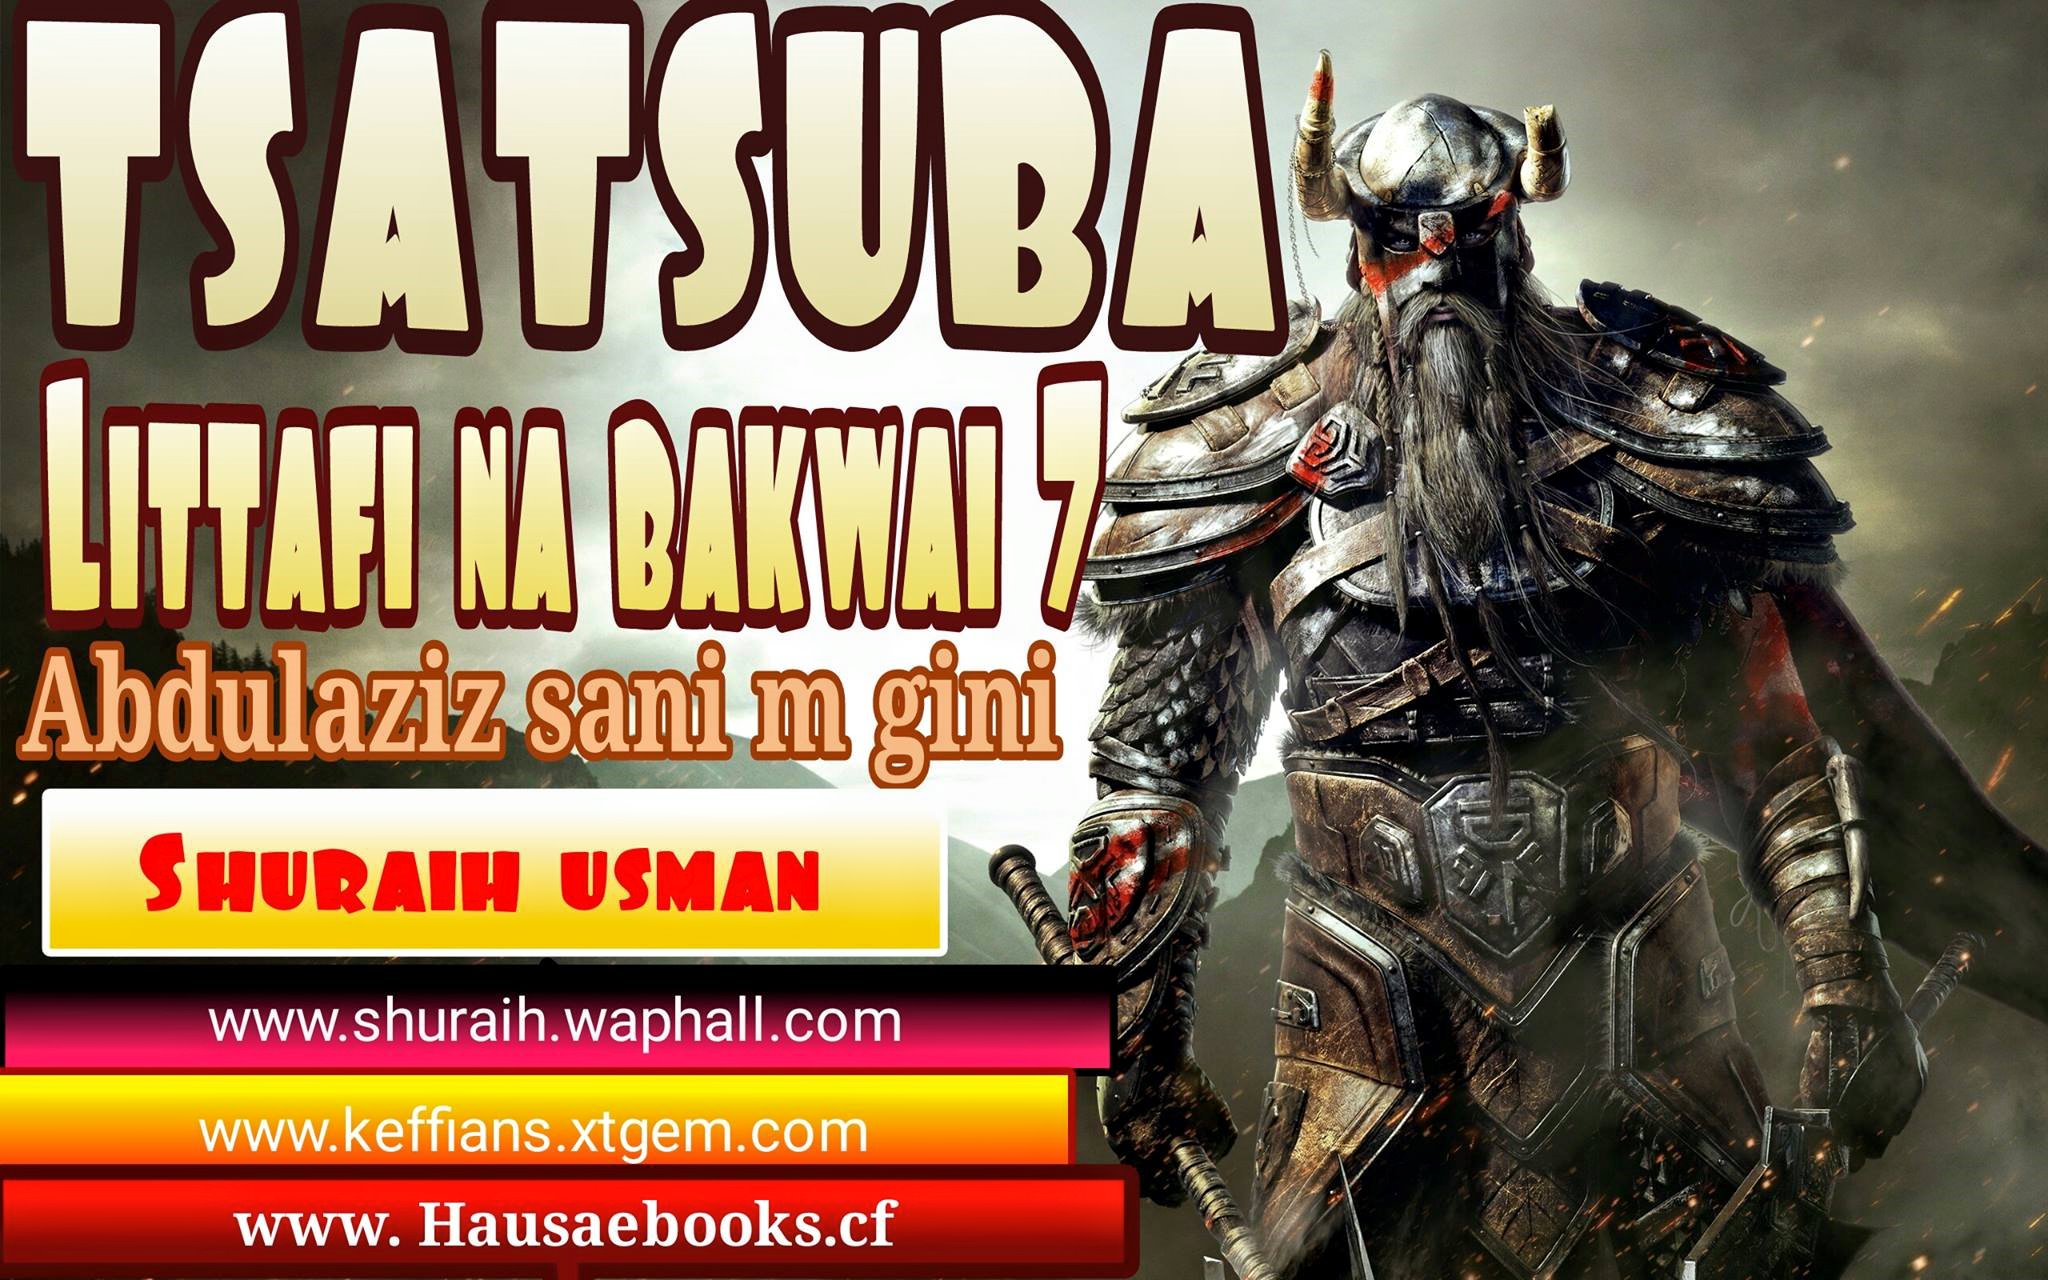 hausaebooks:- TSATSUBA littafi na bakwai 7 na Abdulaziz sani M gini